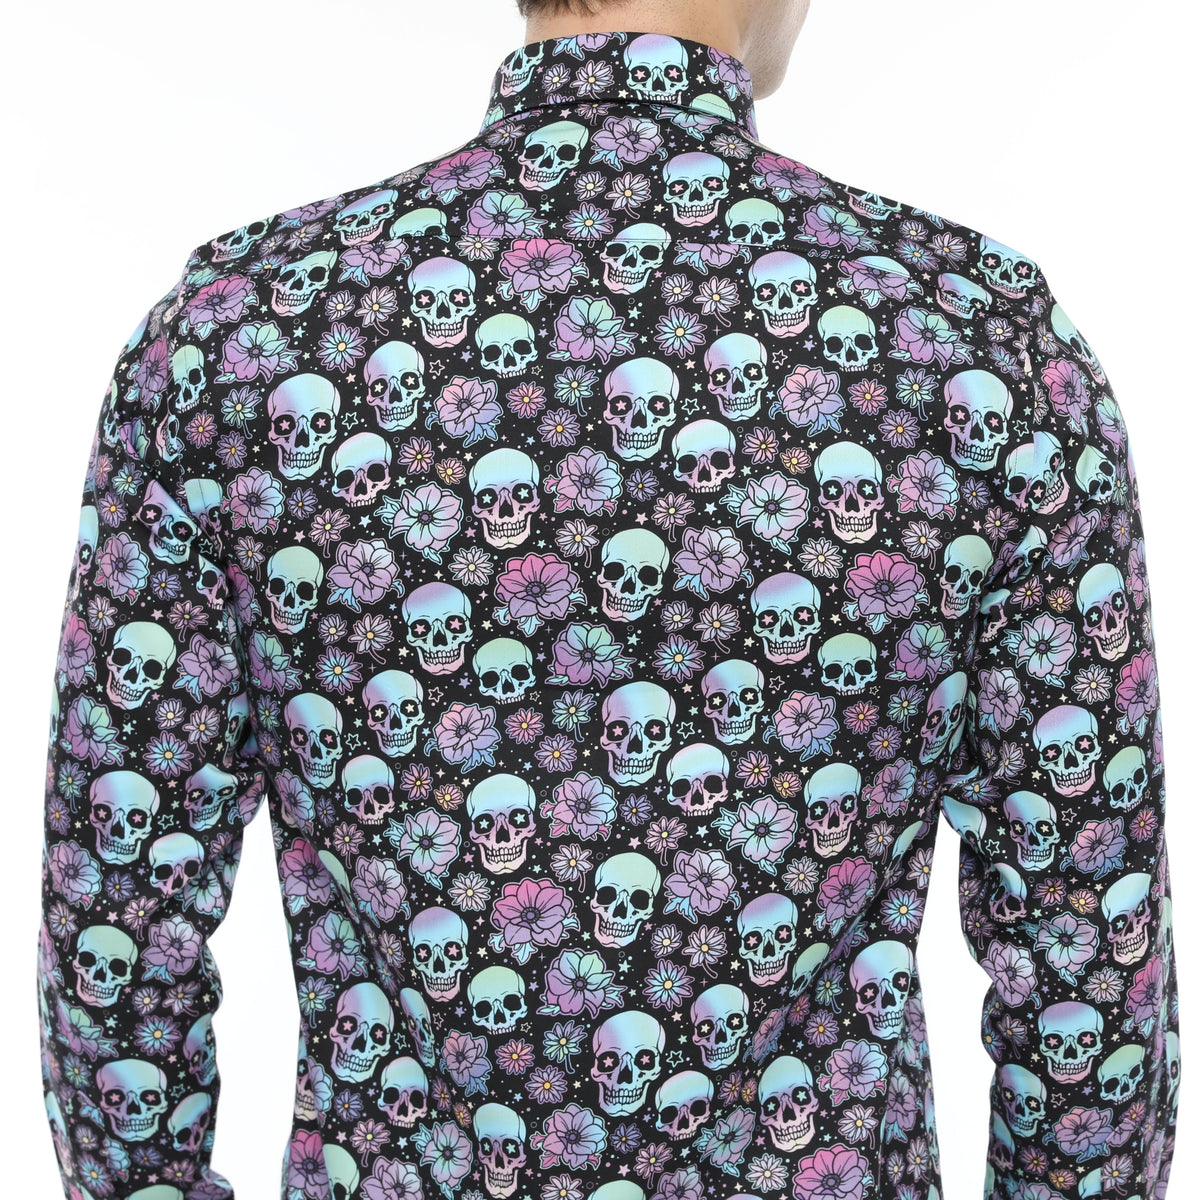 Xact Men's Holographic Skulls & Flower Print Long Sleeved Shirt, Regular Fit, 09, Xsh1208, Holographic Skulls & Flowers